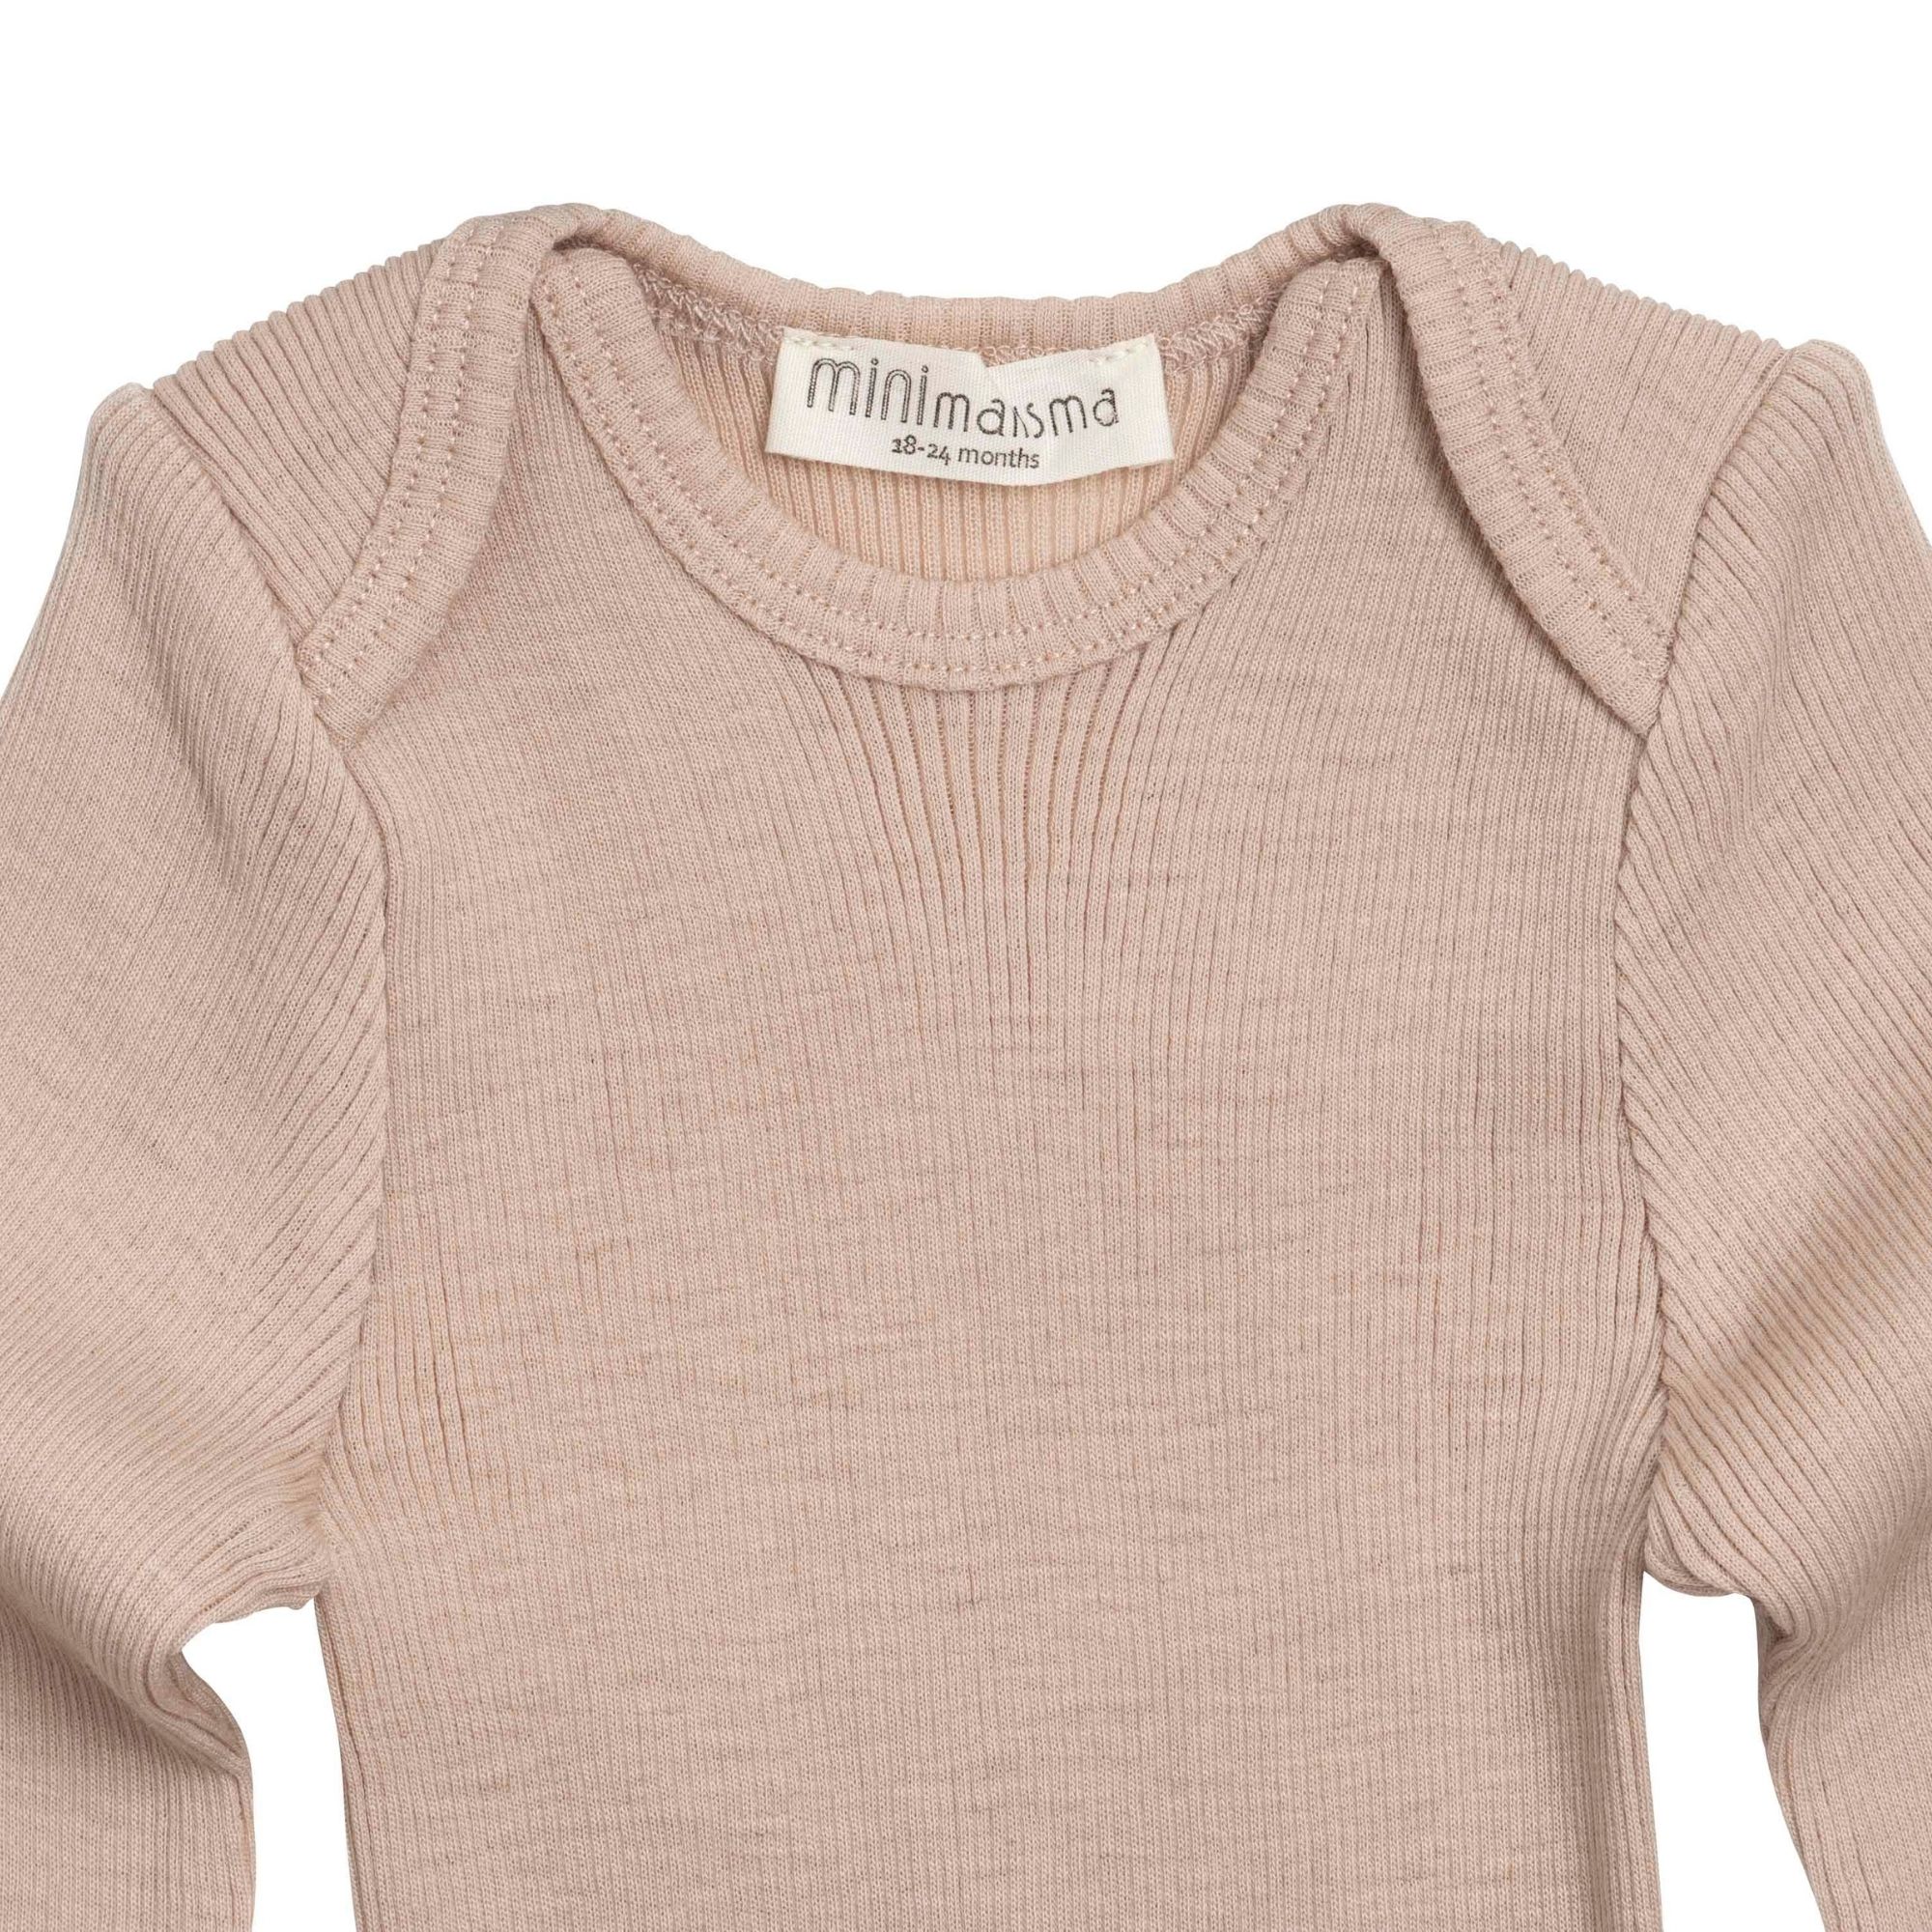 tshirt-manches-longus-bebe-enfant-pure-laine-merinos-minimalisma-maison-de-mamoulia-aspen-sand-sable